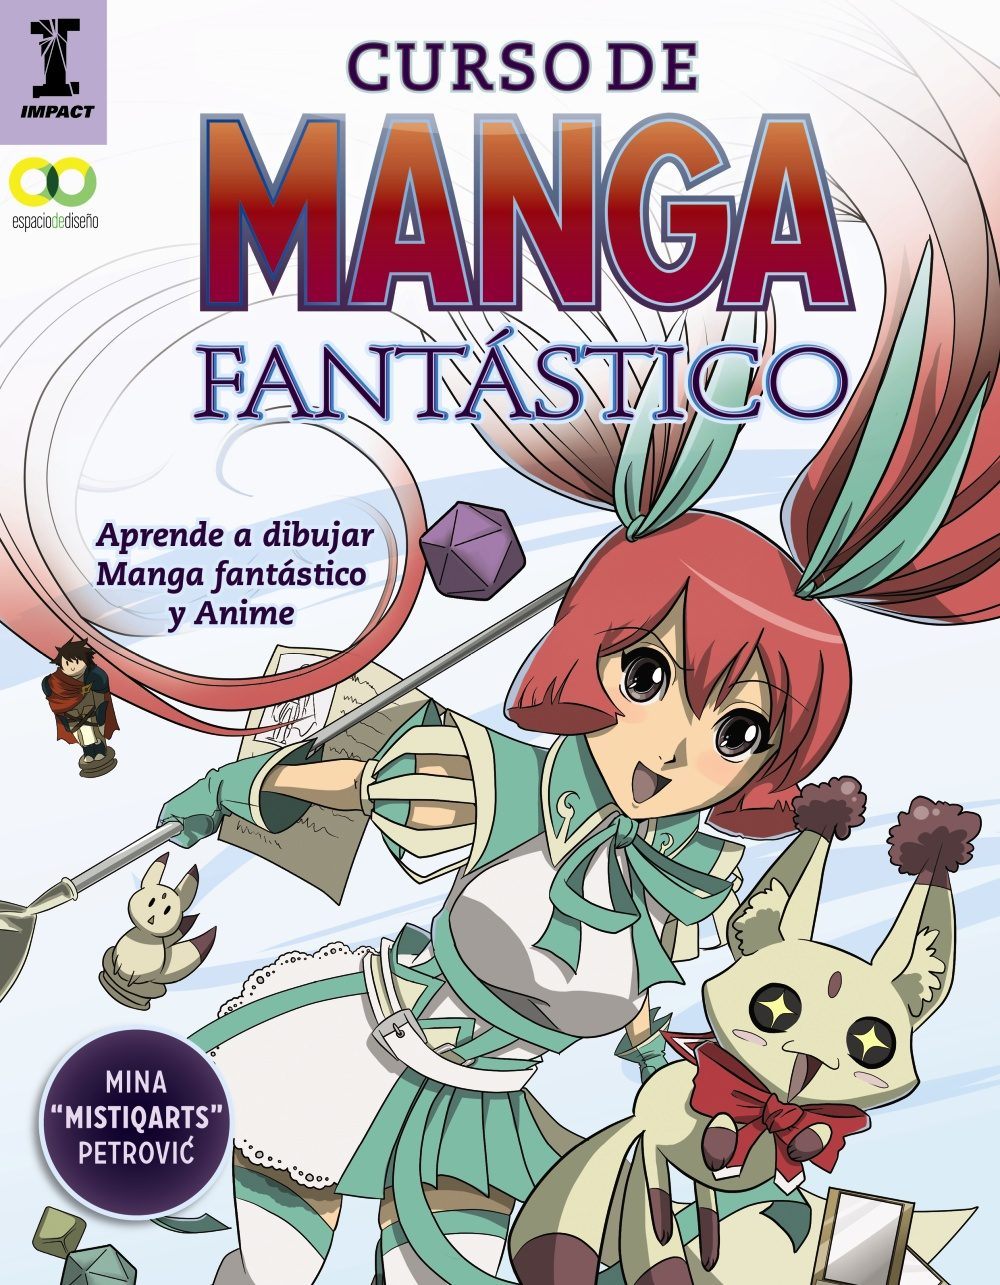 Portada del libro CURSO DE MANGA FANTÁSTICO. Aprende a dibujar Manga fantástico y Anime